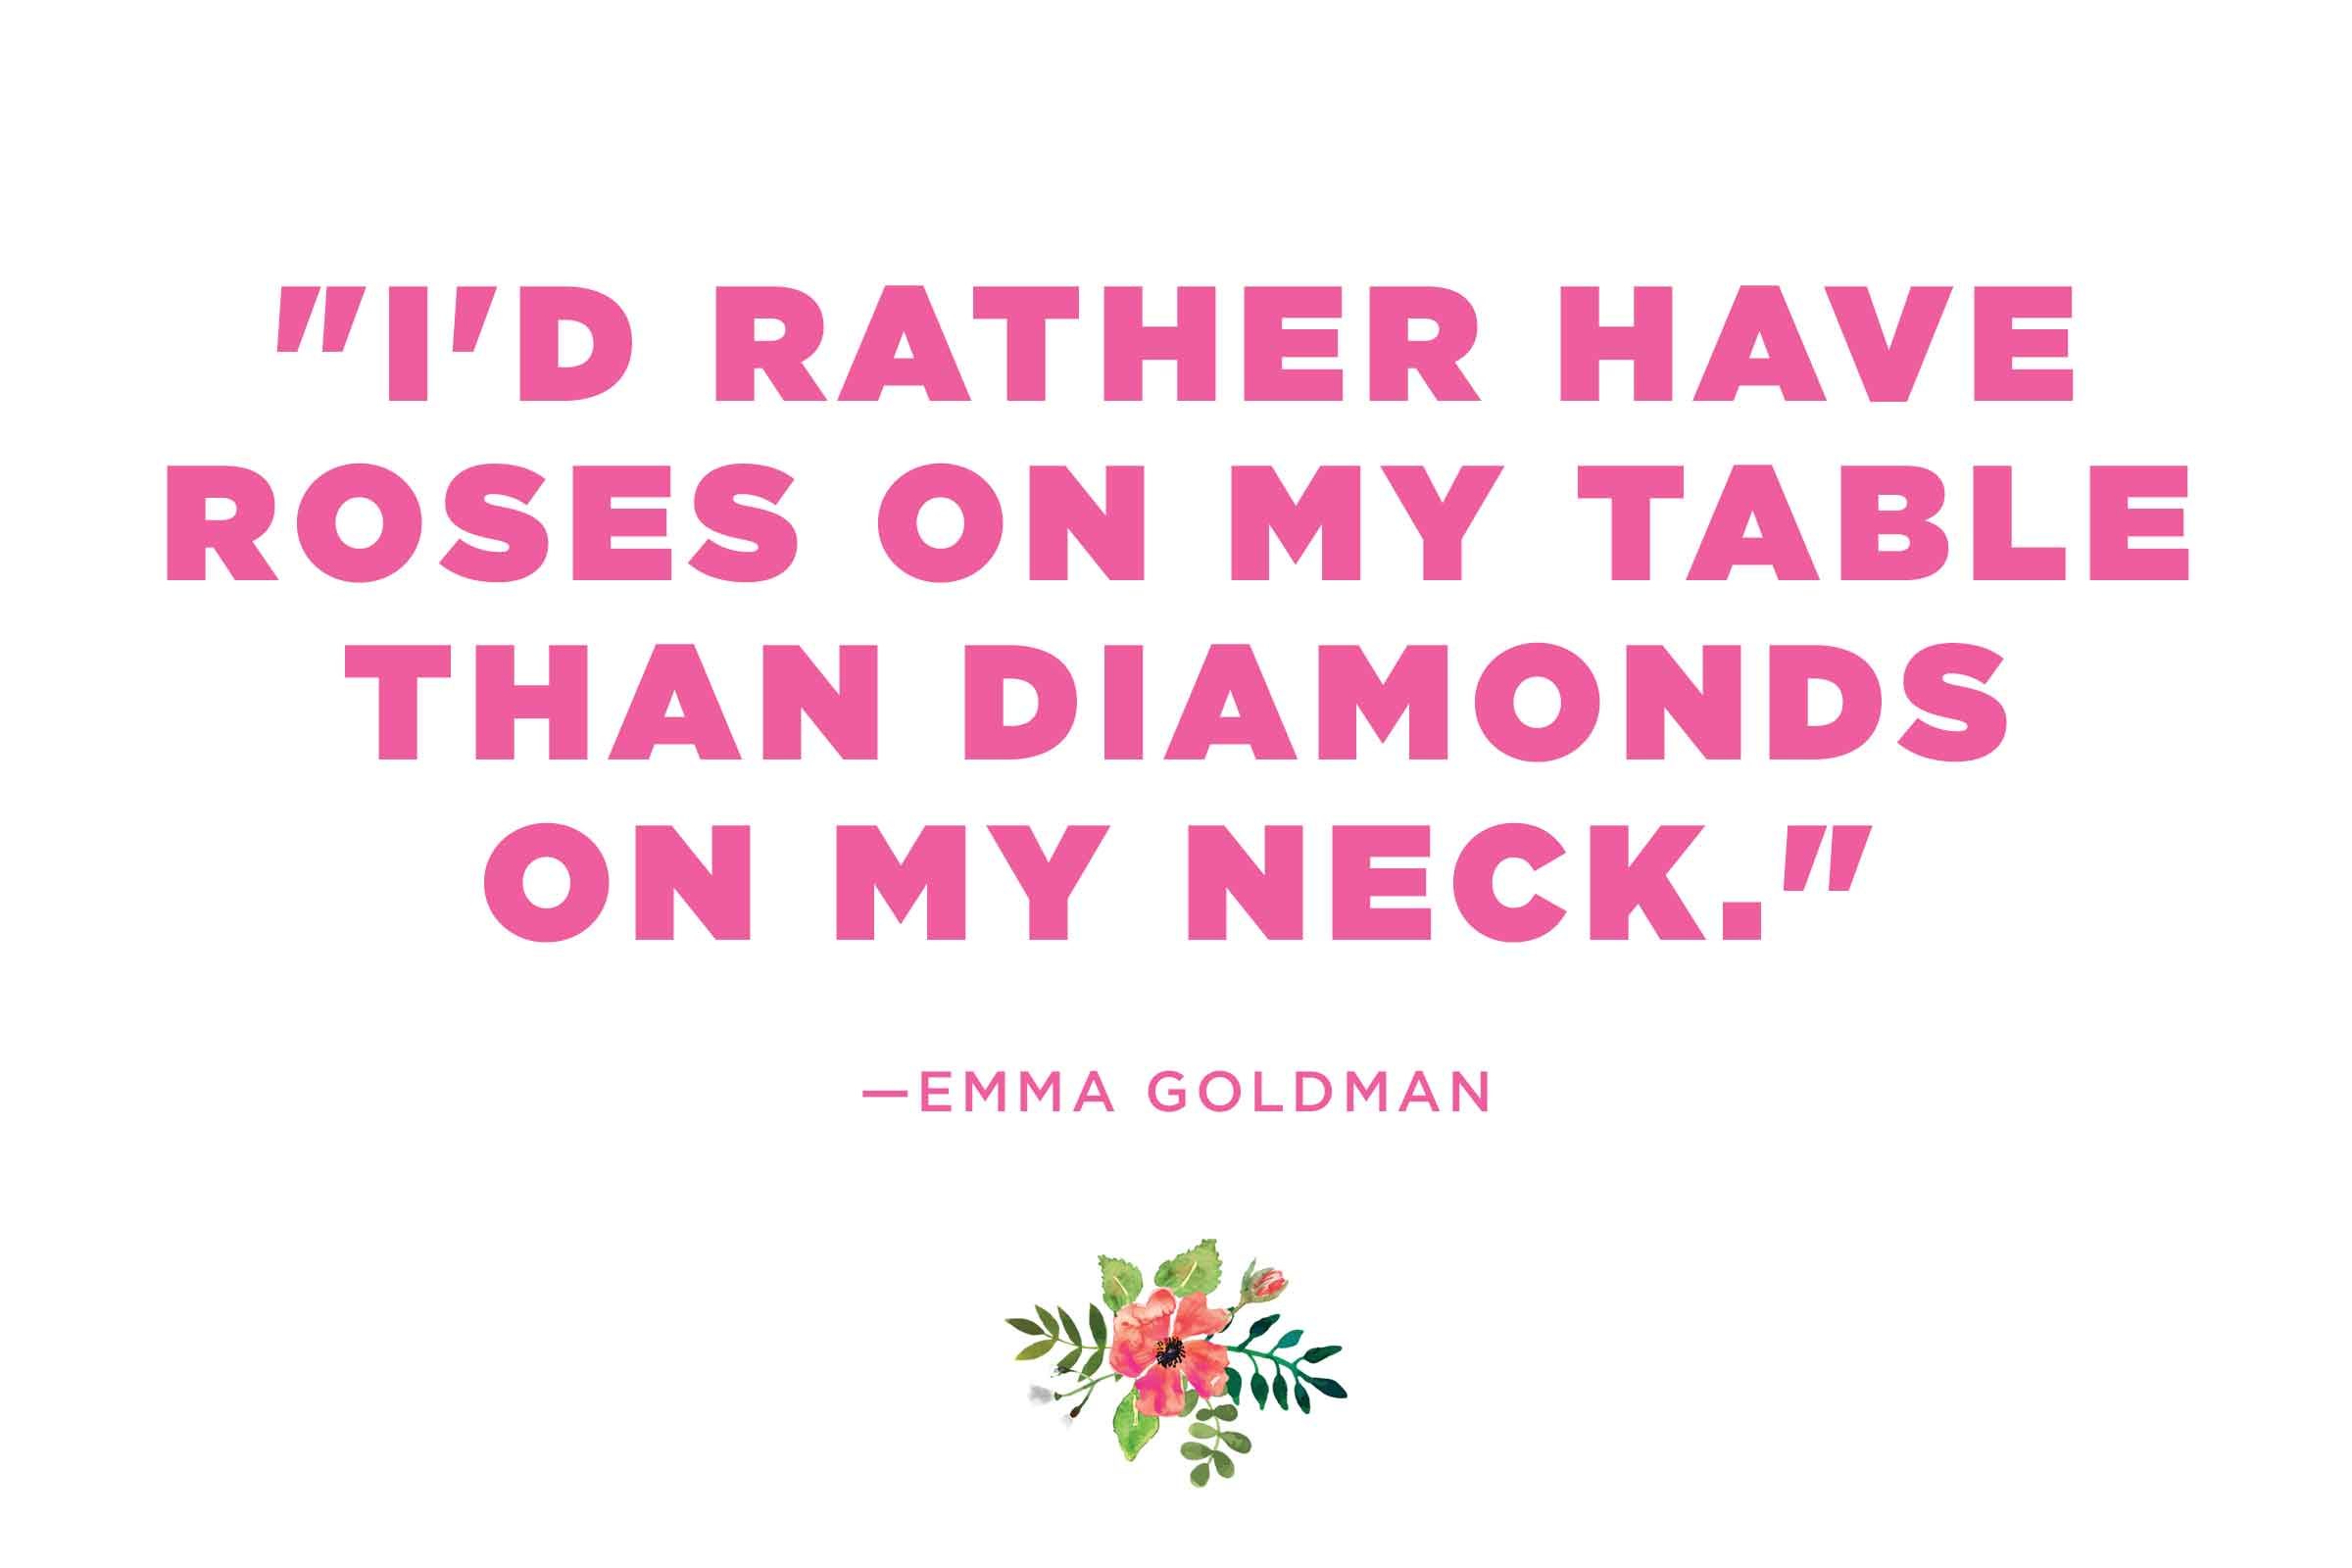 Emma Goldman on earthly priorities